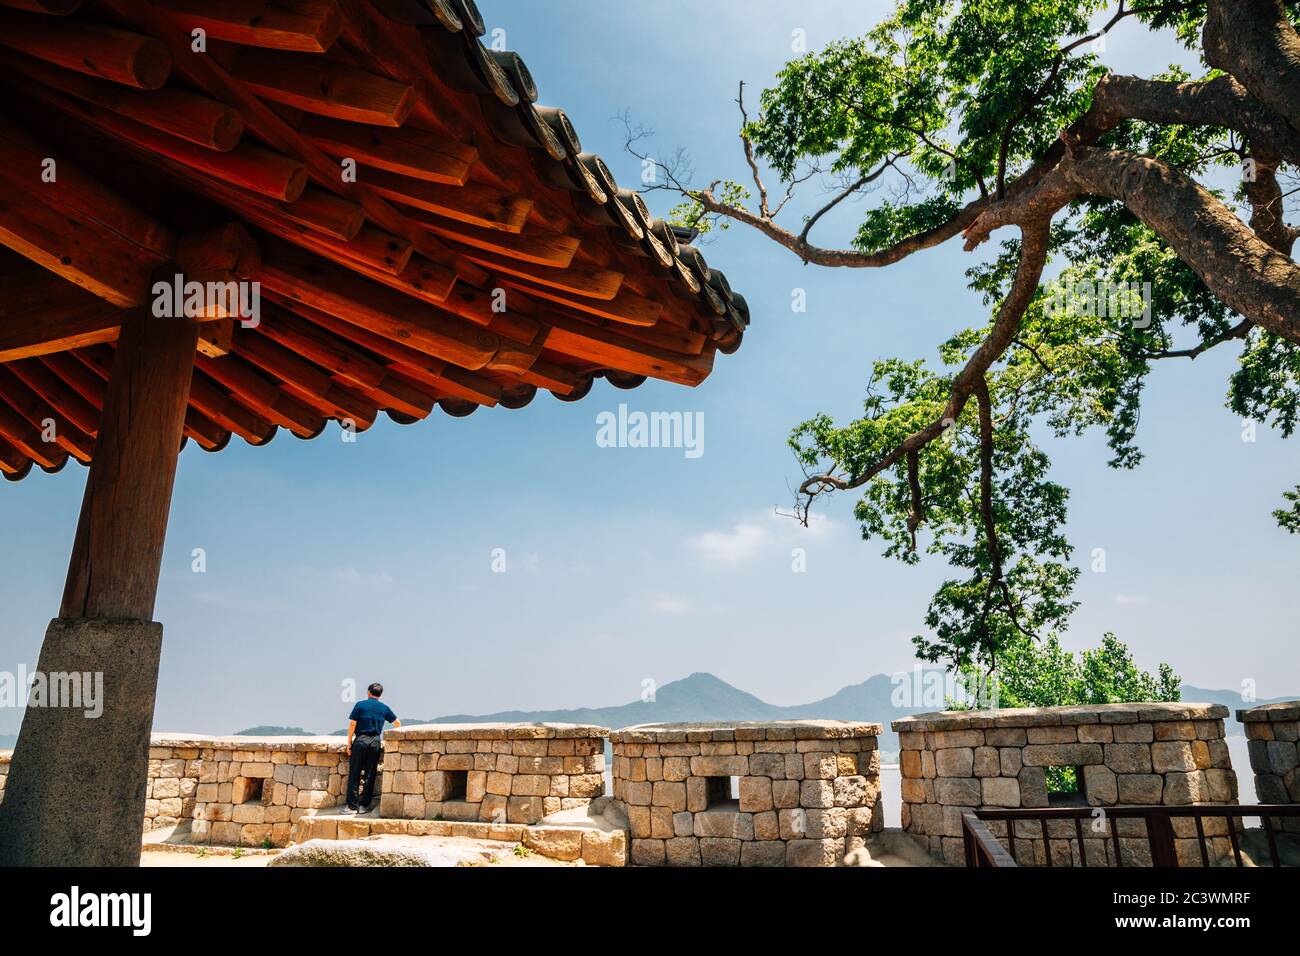 Ganghwa island Yeonmijeong Pavilion in Incheon, Korea Stock Photo